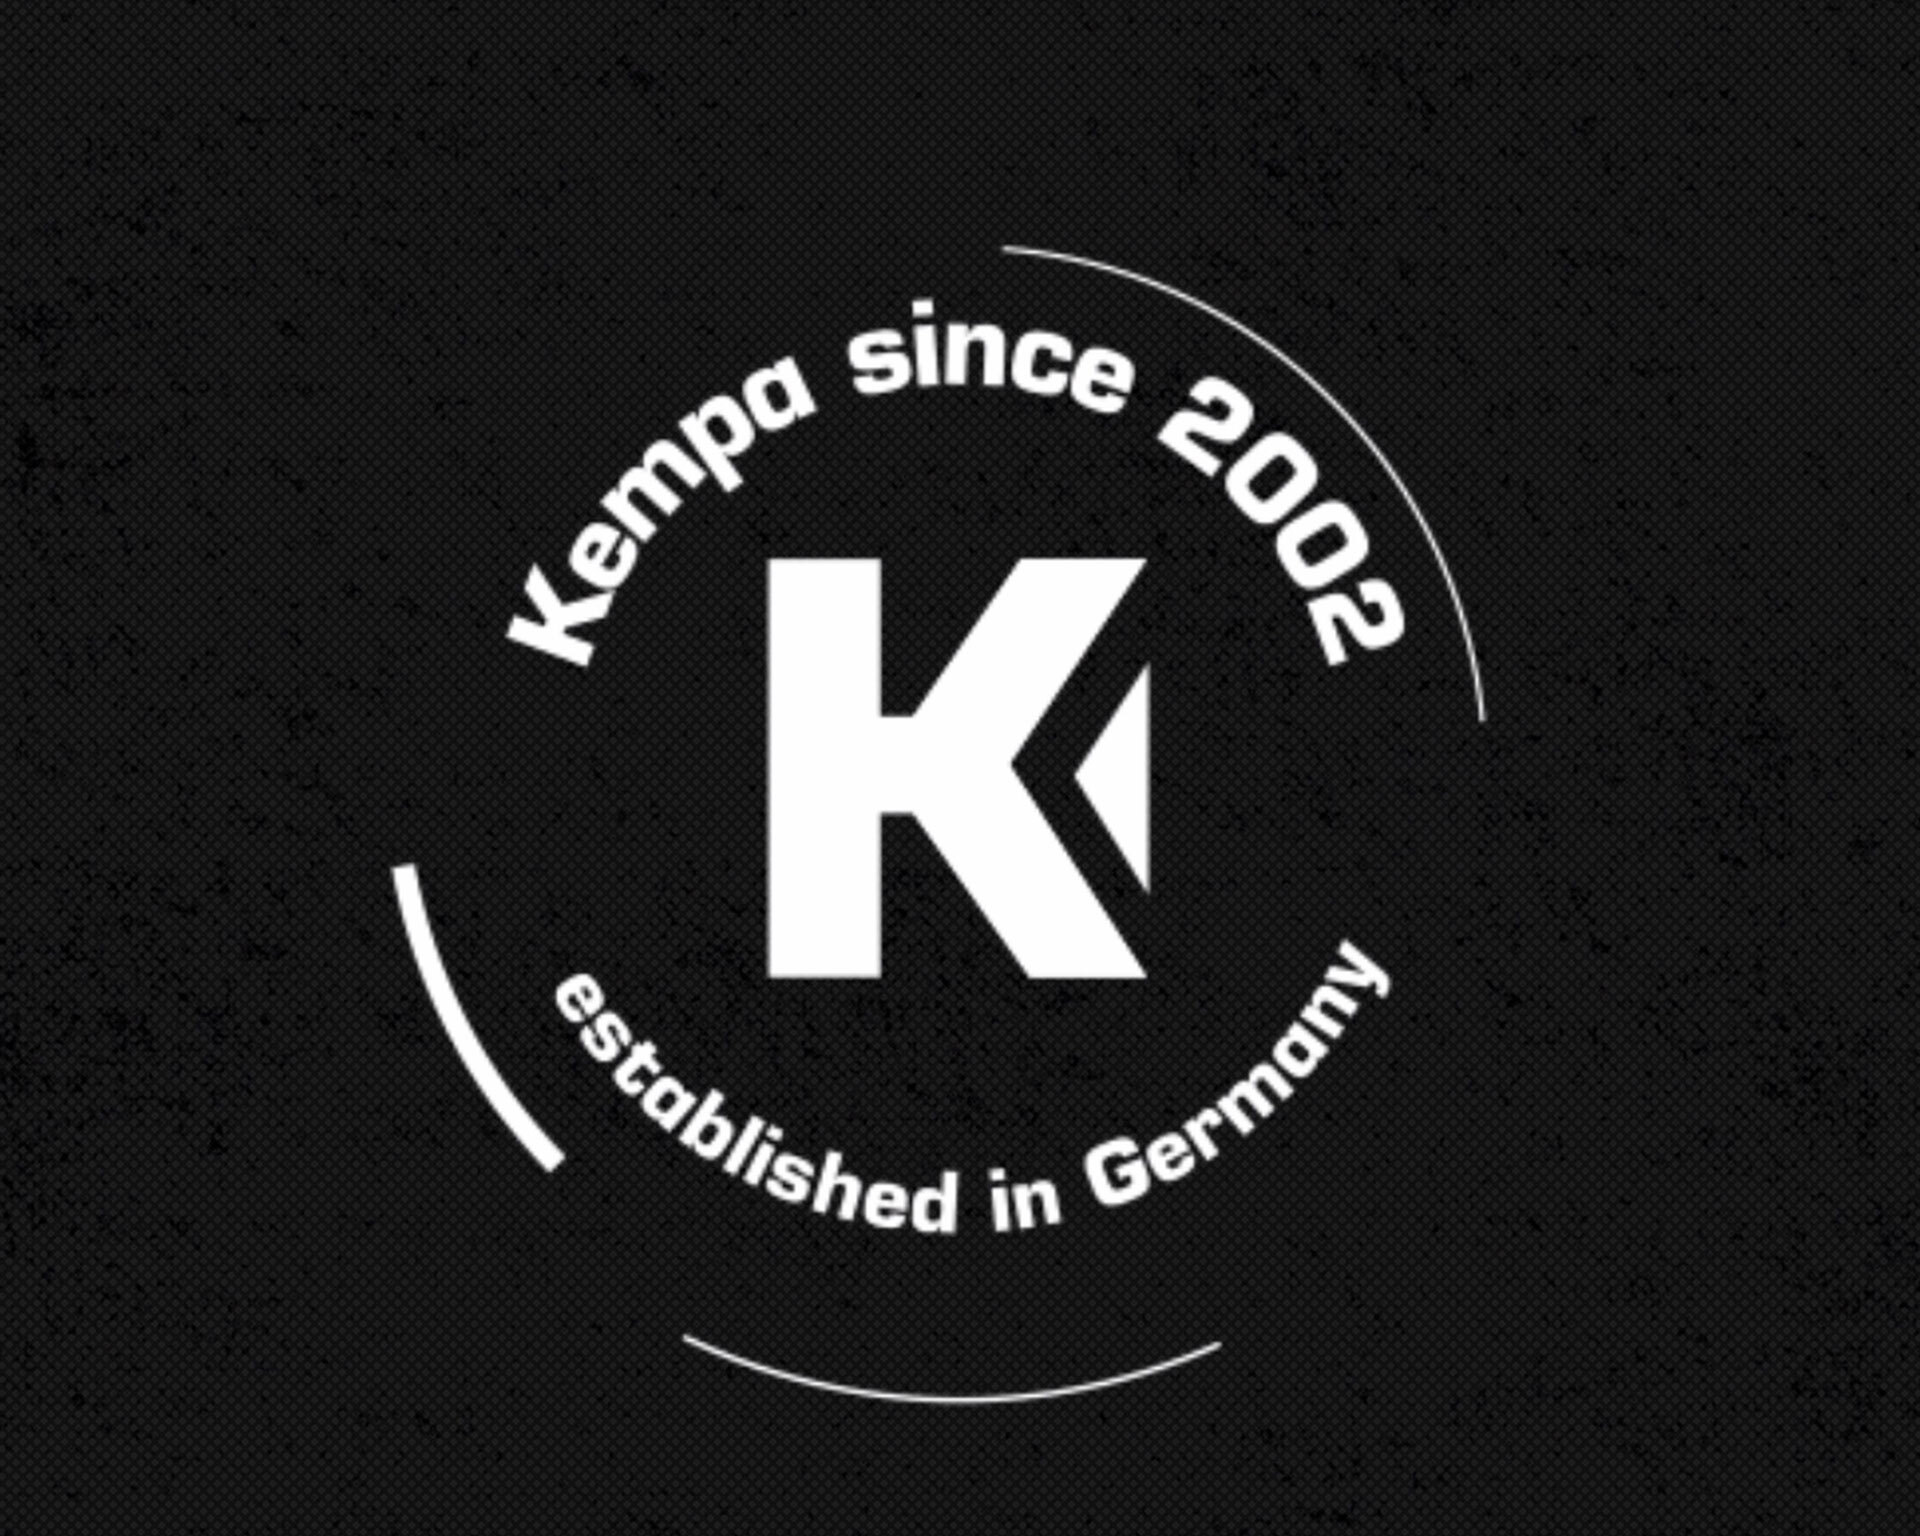 20 Jahre Kempa Logo